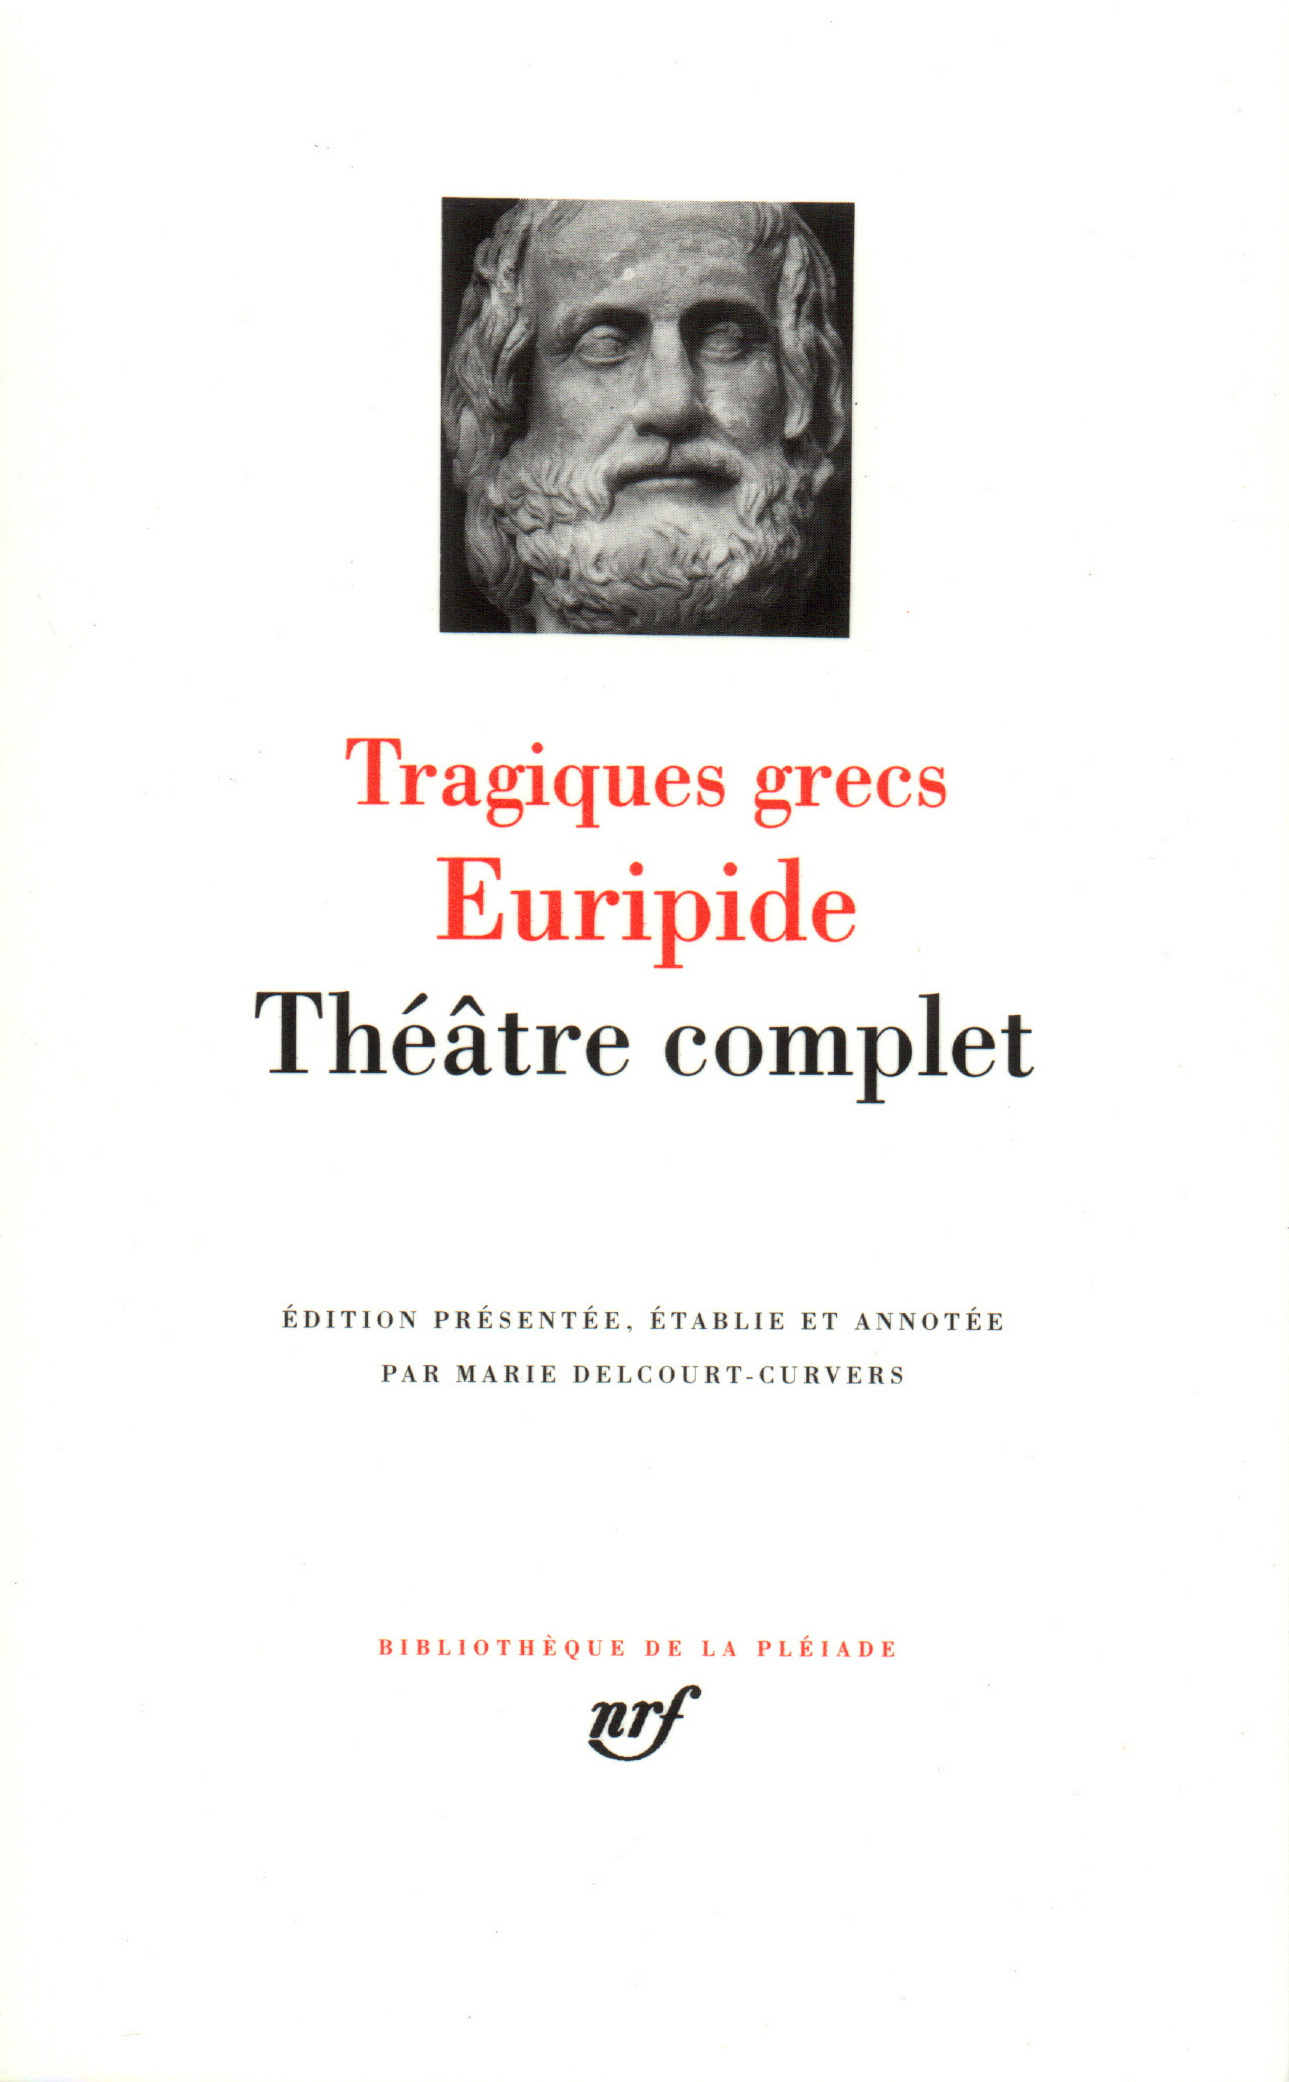 Théâtre complet (9782070105663-front-cover)